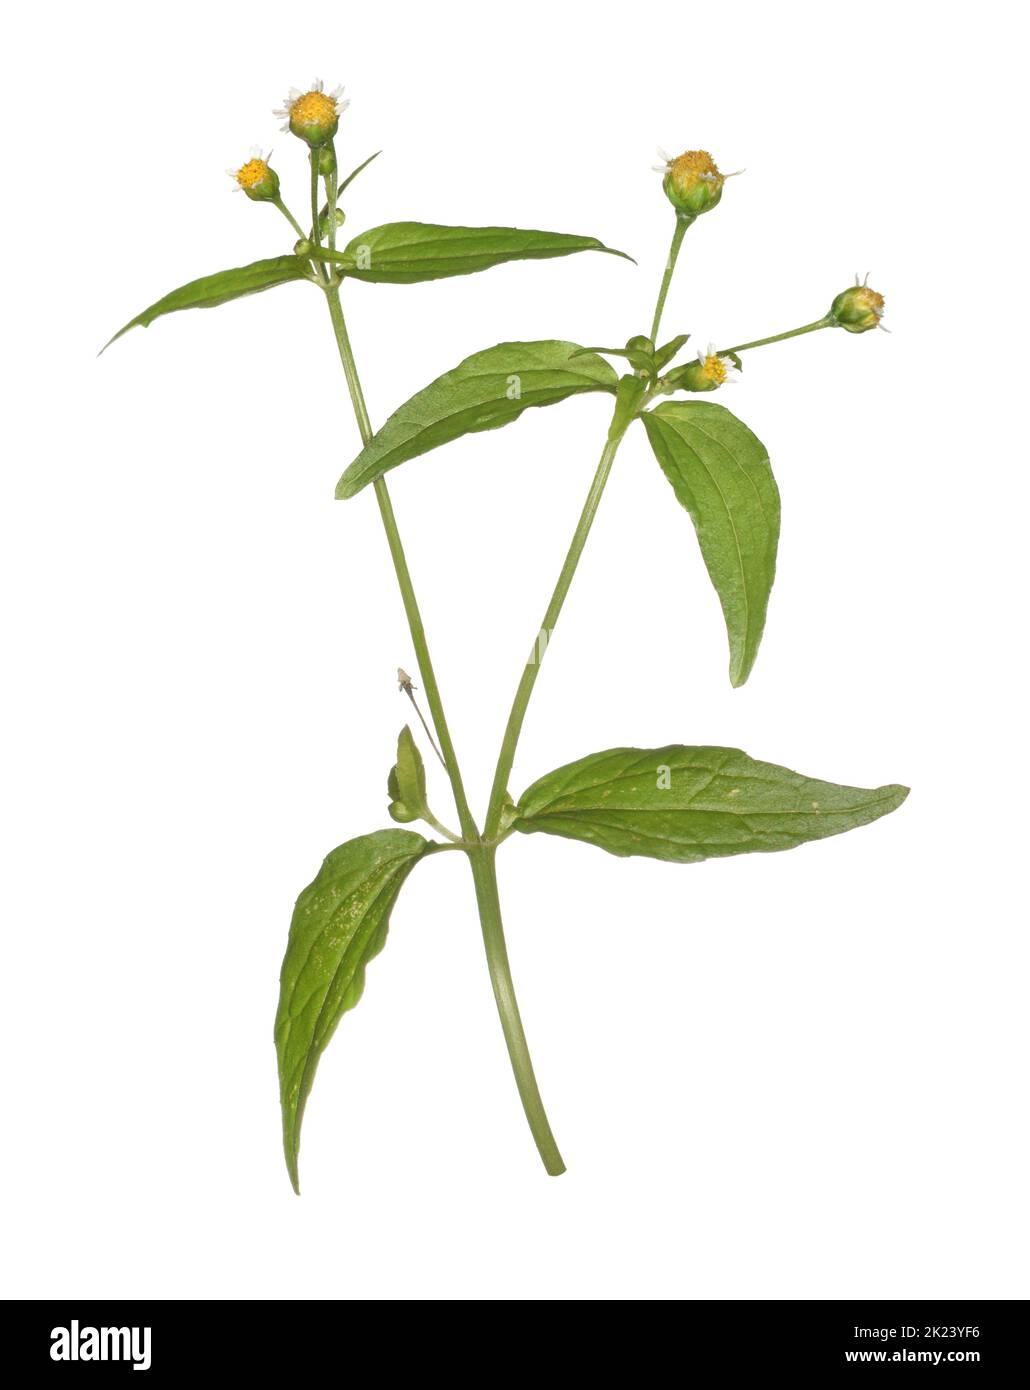 Gallant-Soldat - Gallinsoga parviflora Stockfoto